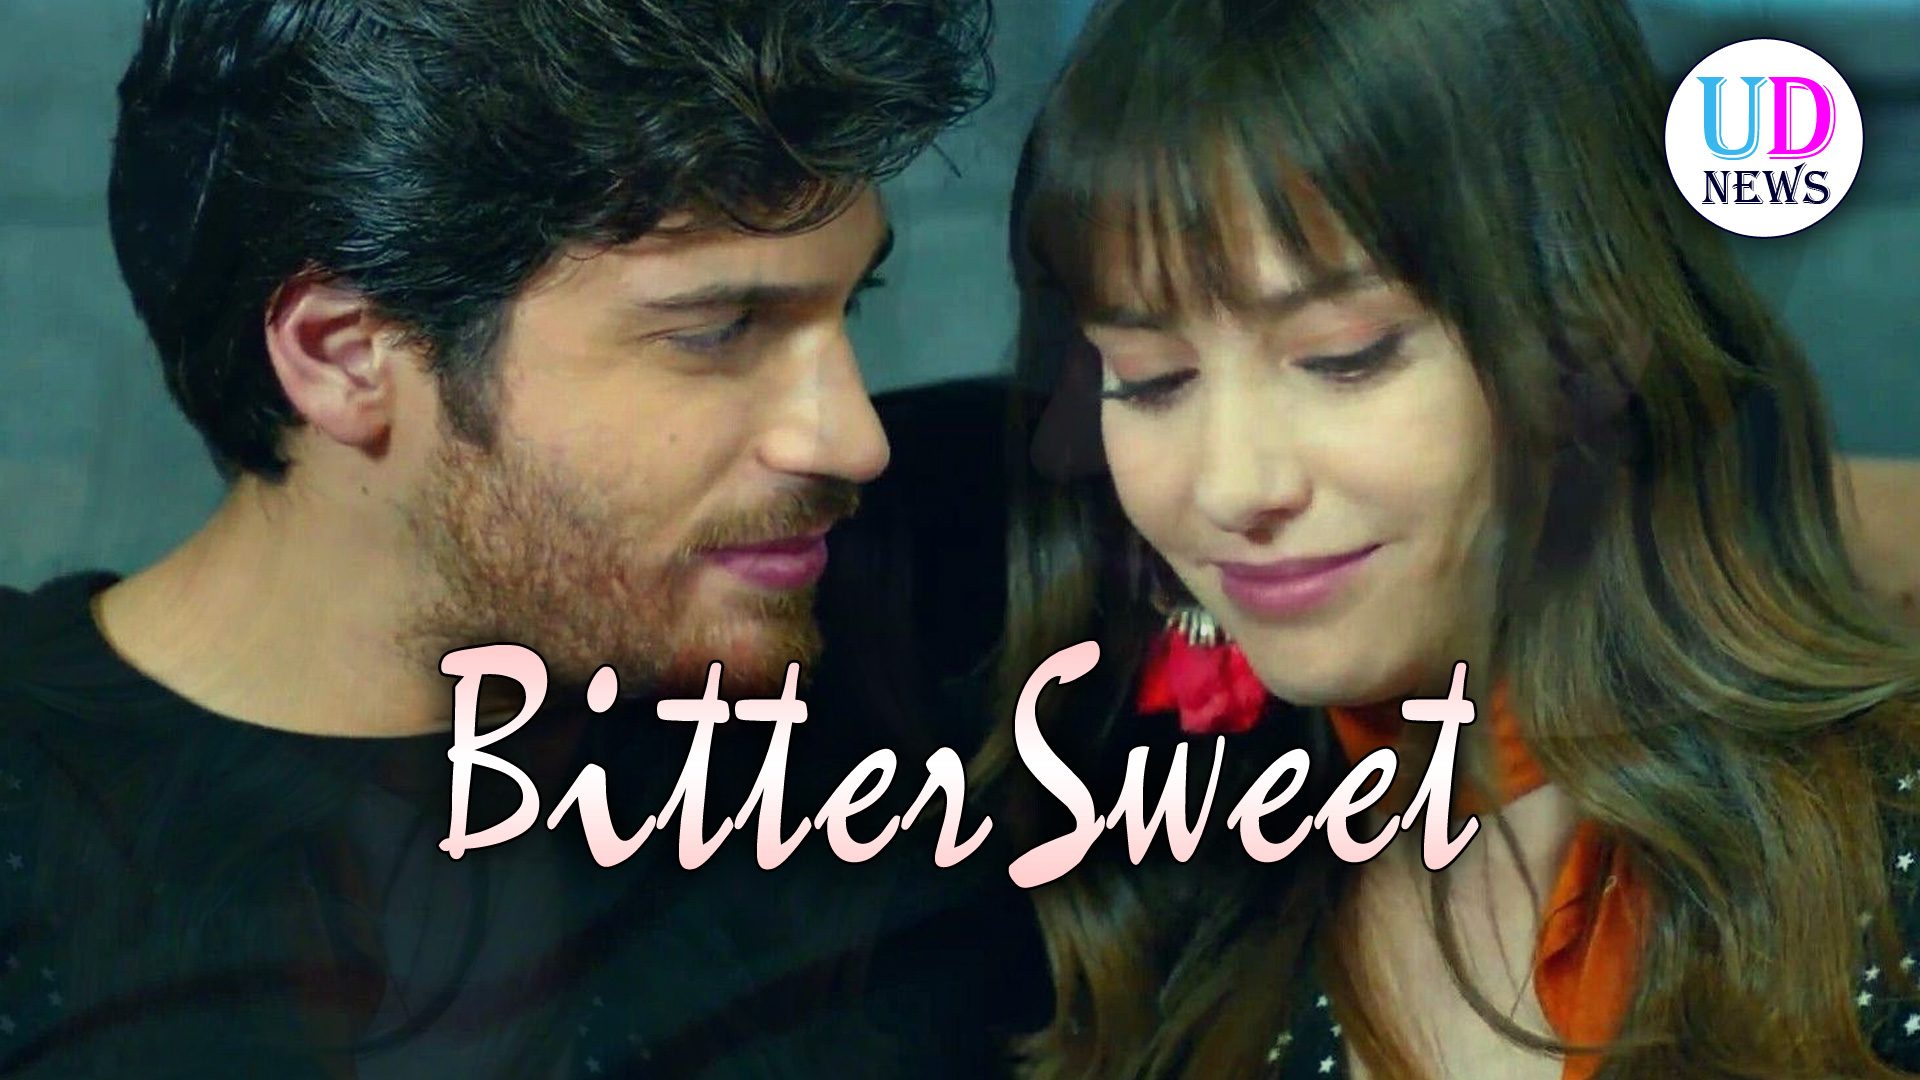 Bitter Sweet (Dolunay) La Soap Estiva di Canale 5! UD News